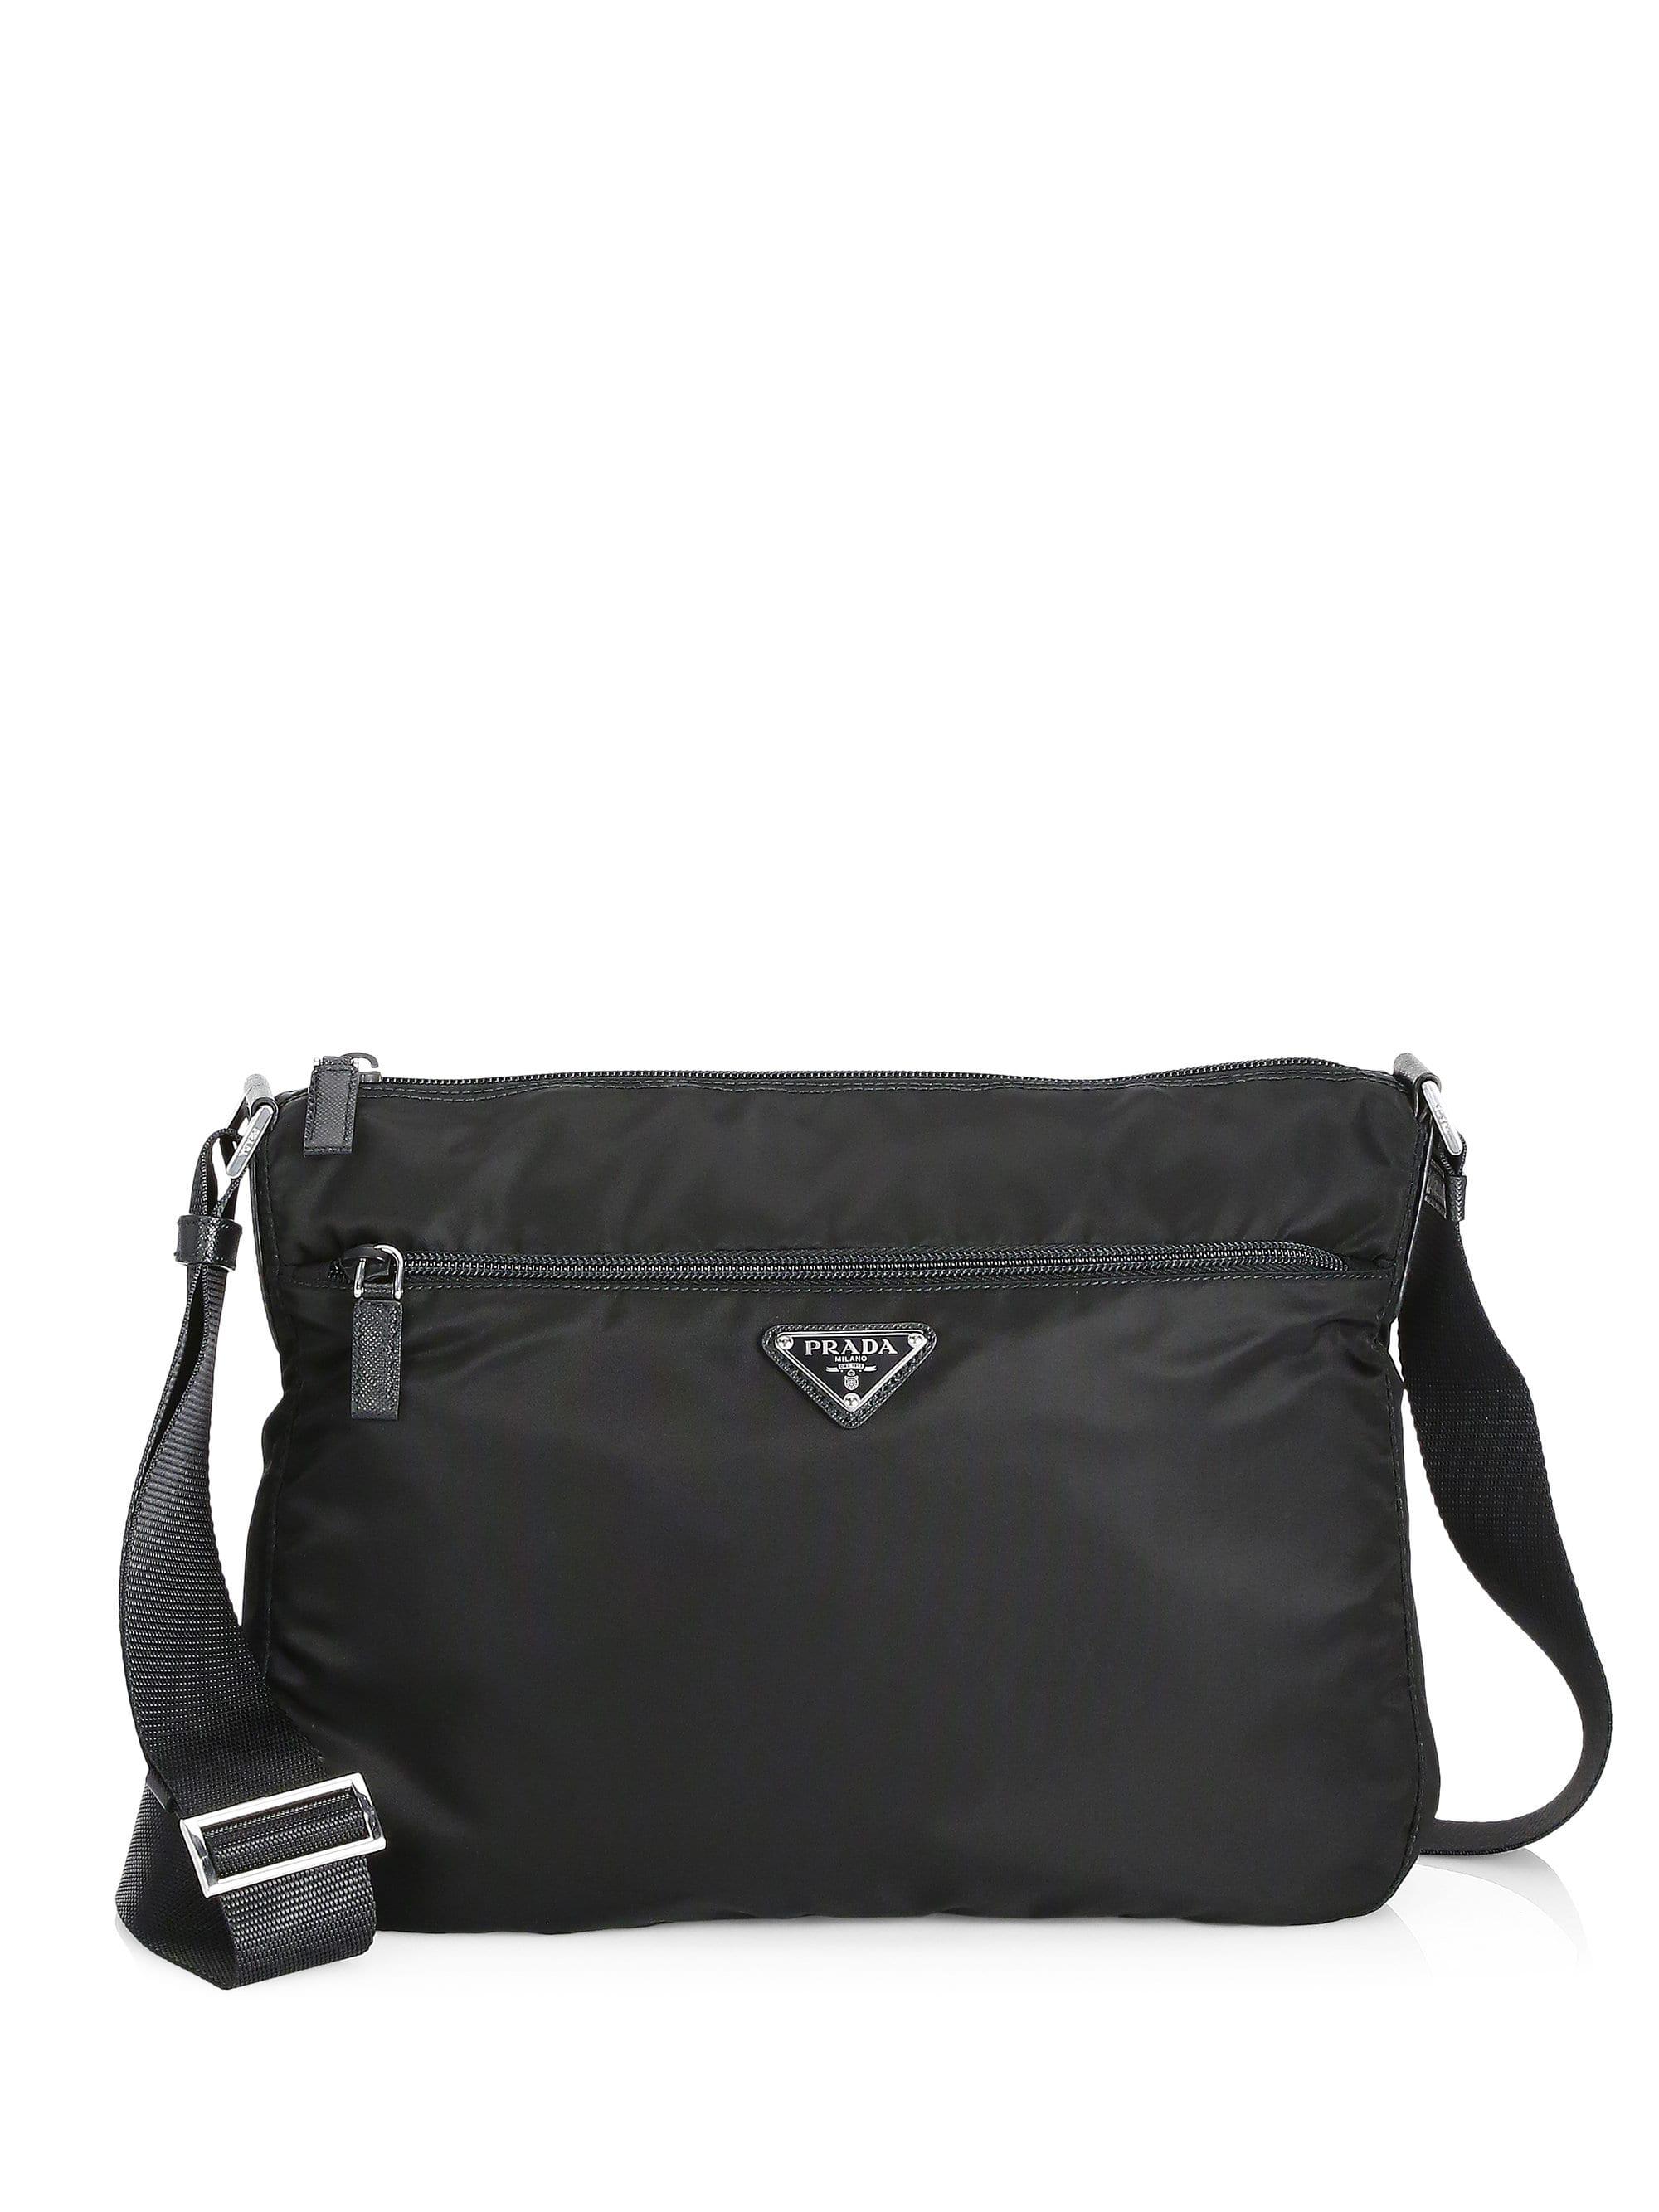 Prada Synthetic Large Nylon Crossbody Bag in Black - Lyst